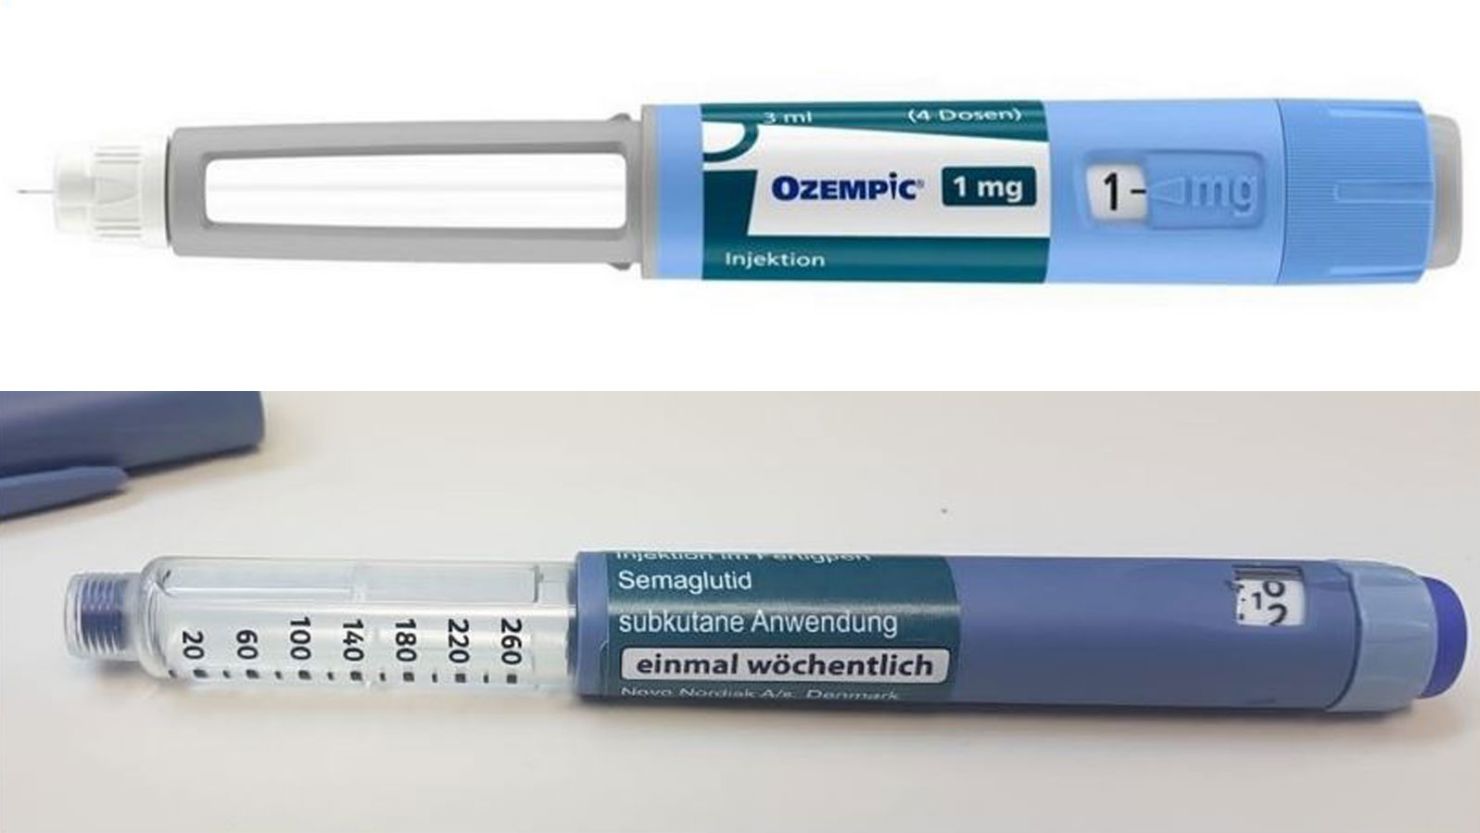 European regulators warn of fake Ozempic pens found at wholesalers in EU,  UK amid shortage